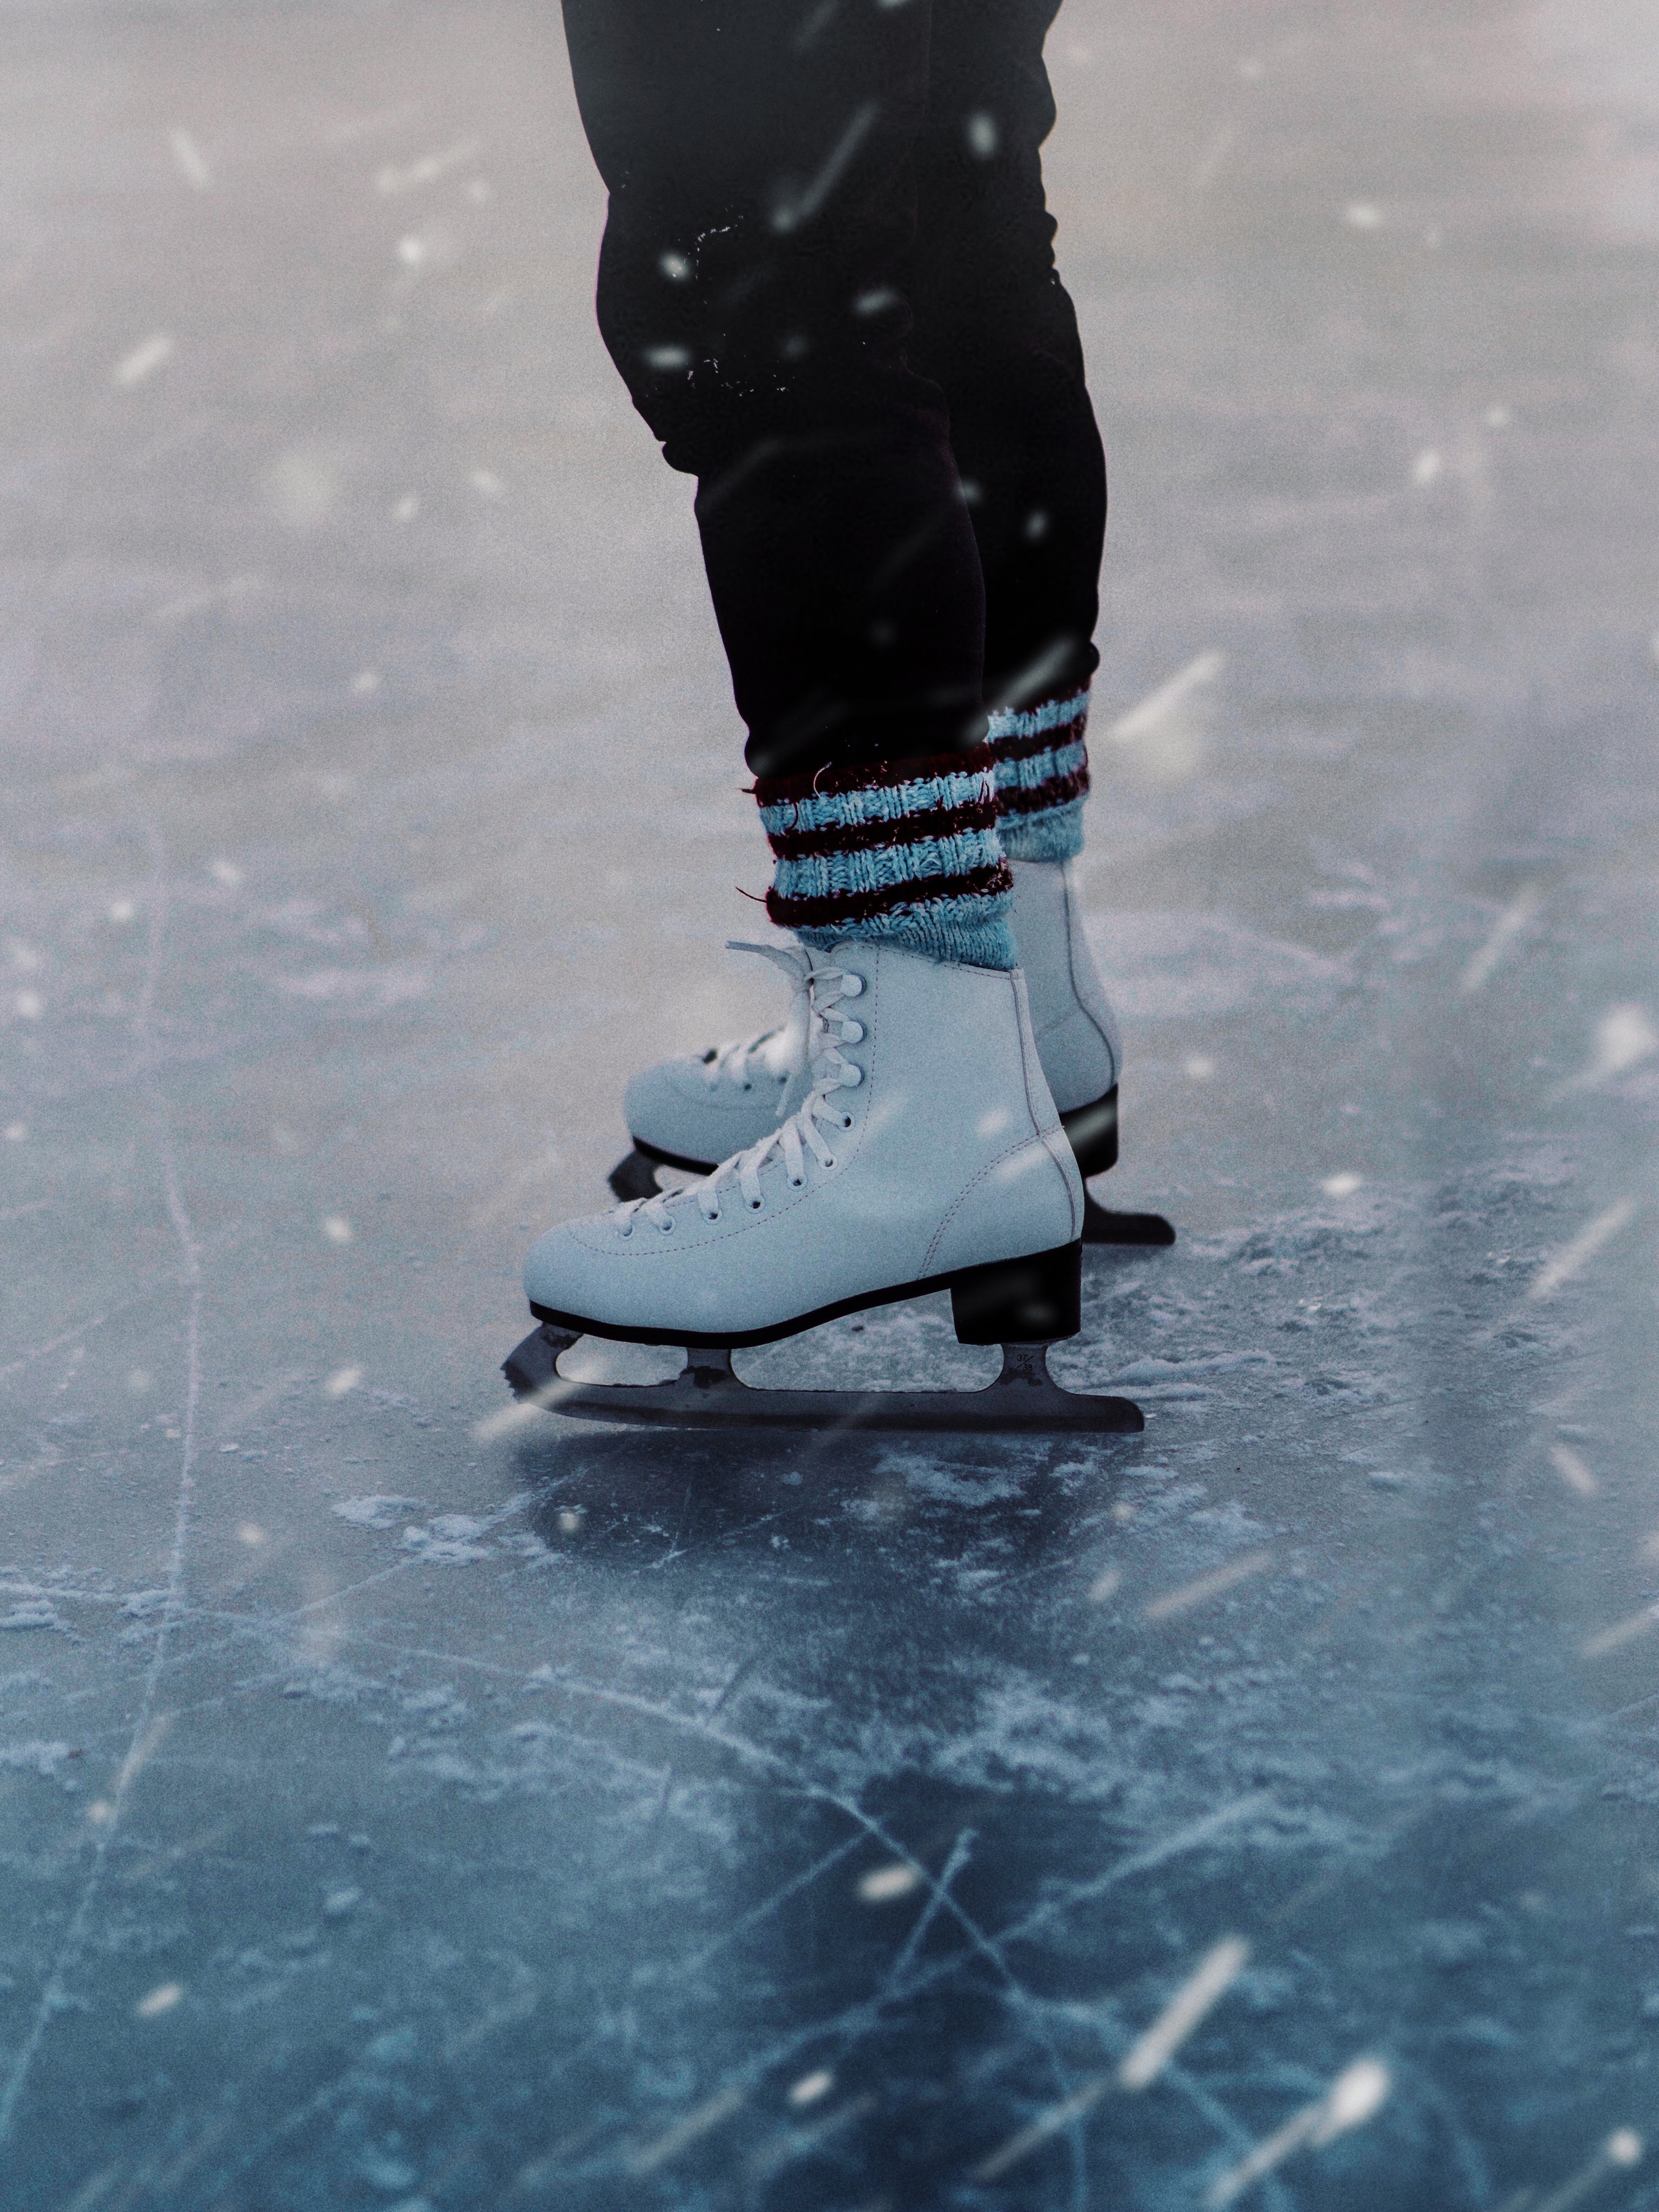 pexels image credit to Gantas Vaiciulenas. Image of two feet in ice skates on a frozen lake